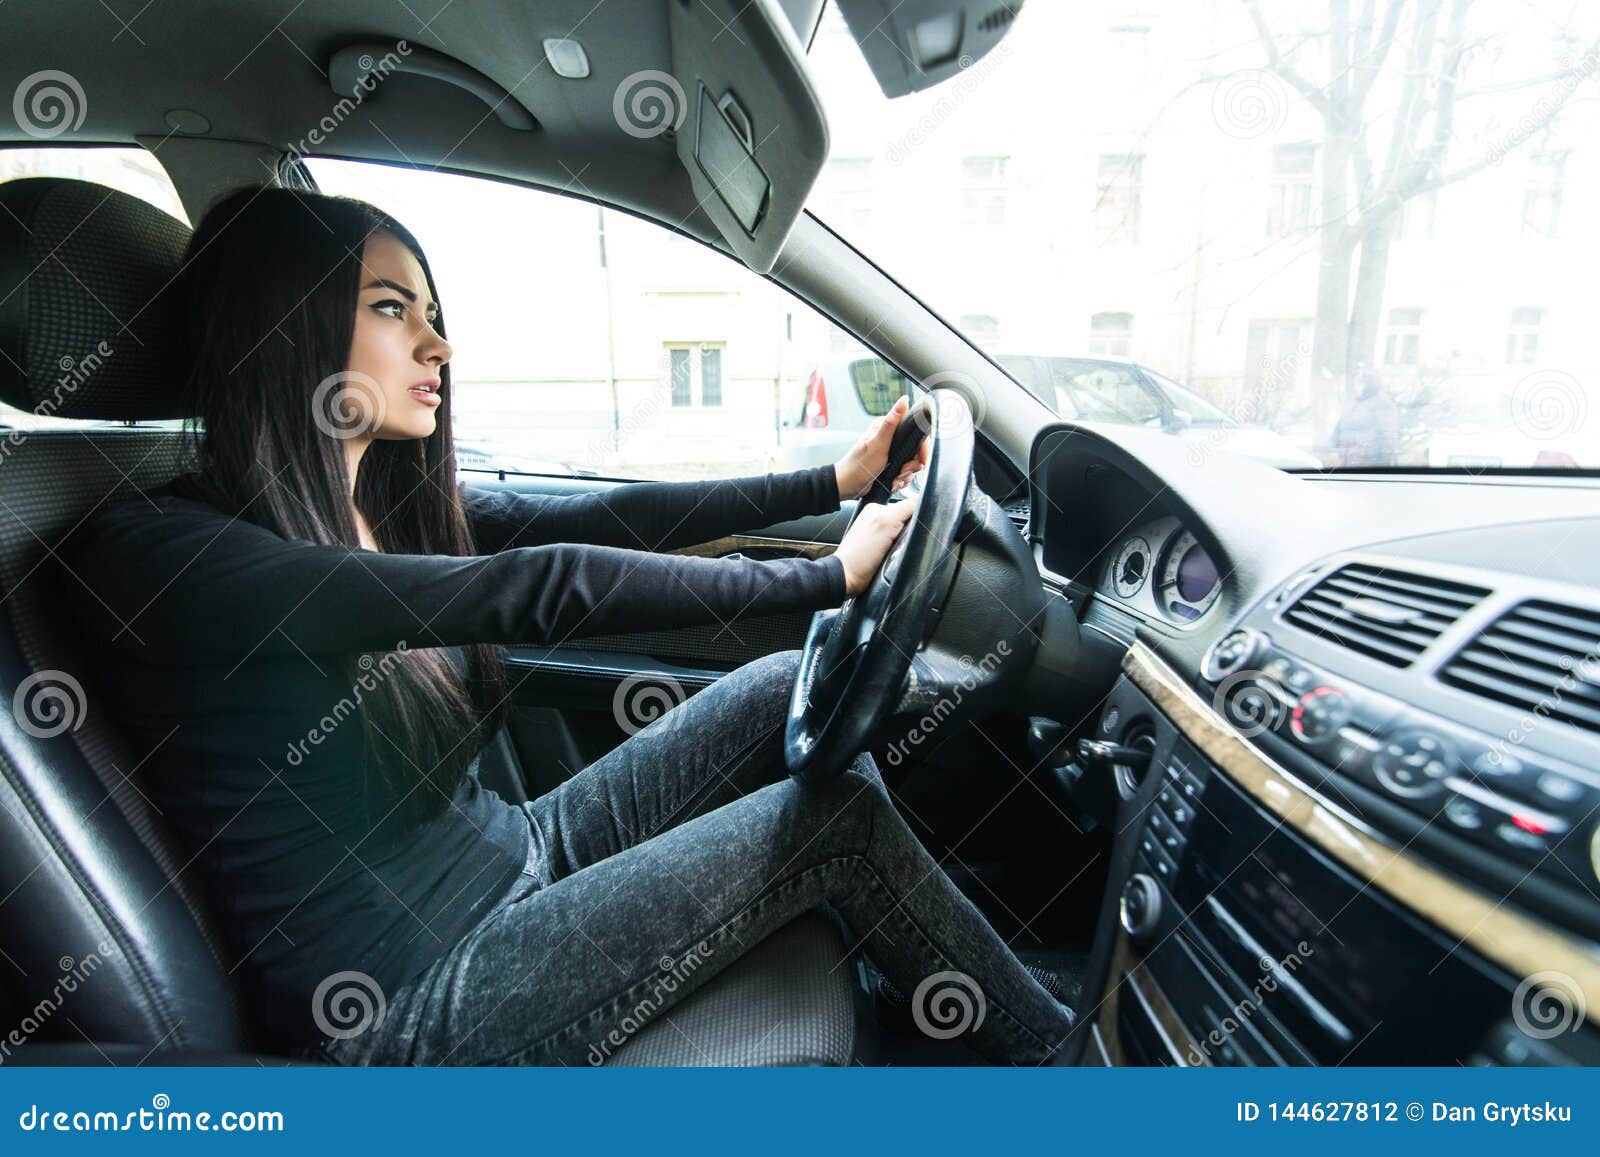 beautiful woman beep in the car in panic while drive